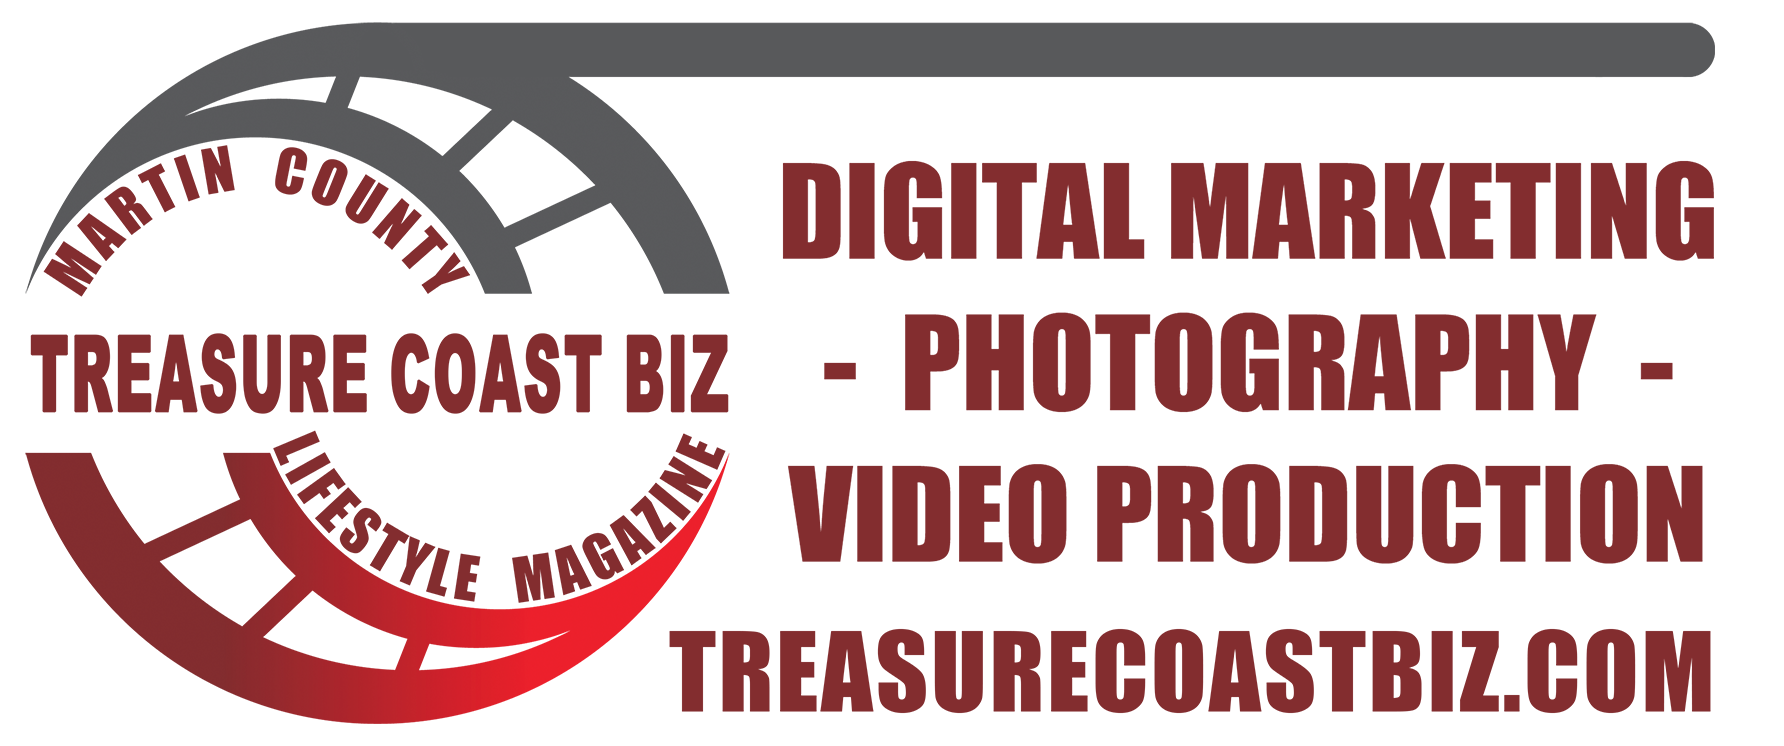 MCLM Media Pro - Treasure Coast Biz Digital Marketing in Stuart, Florida. Social Media Content Creators and Managers. Photography and Video Production on the Treasure Coast.